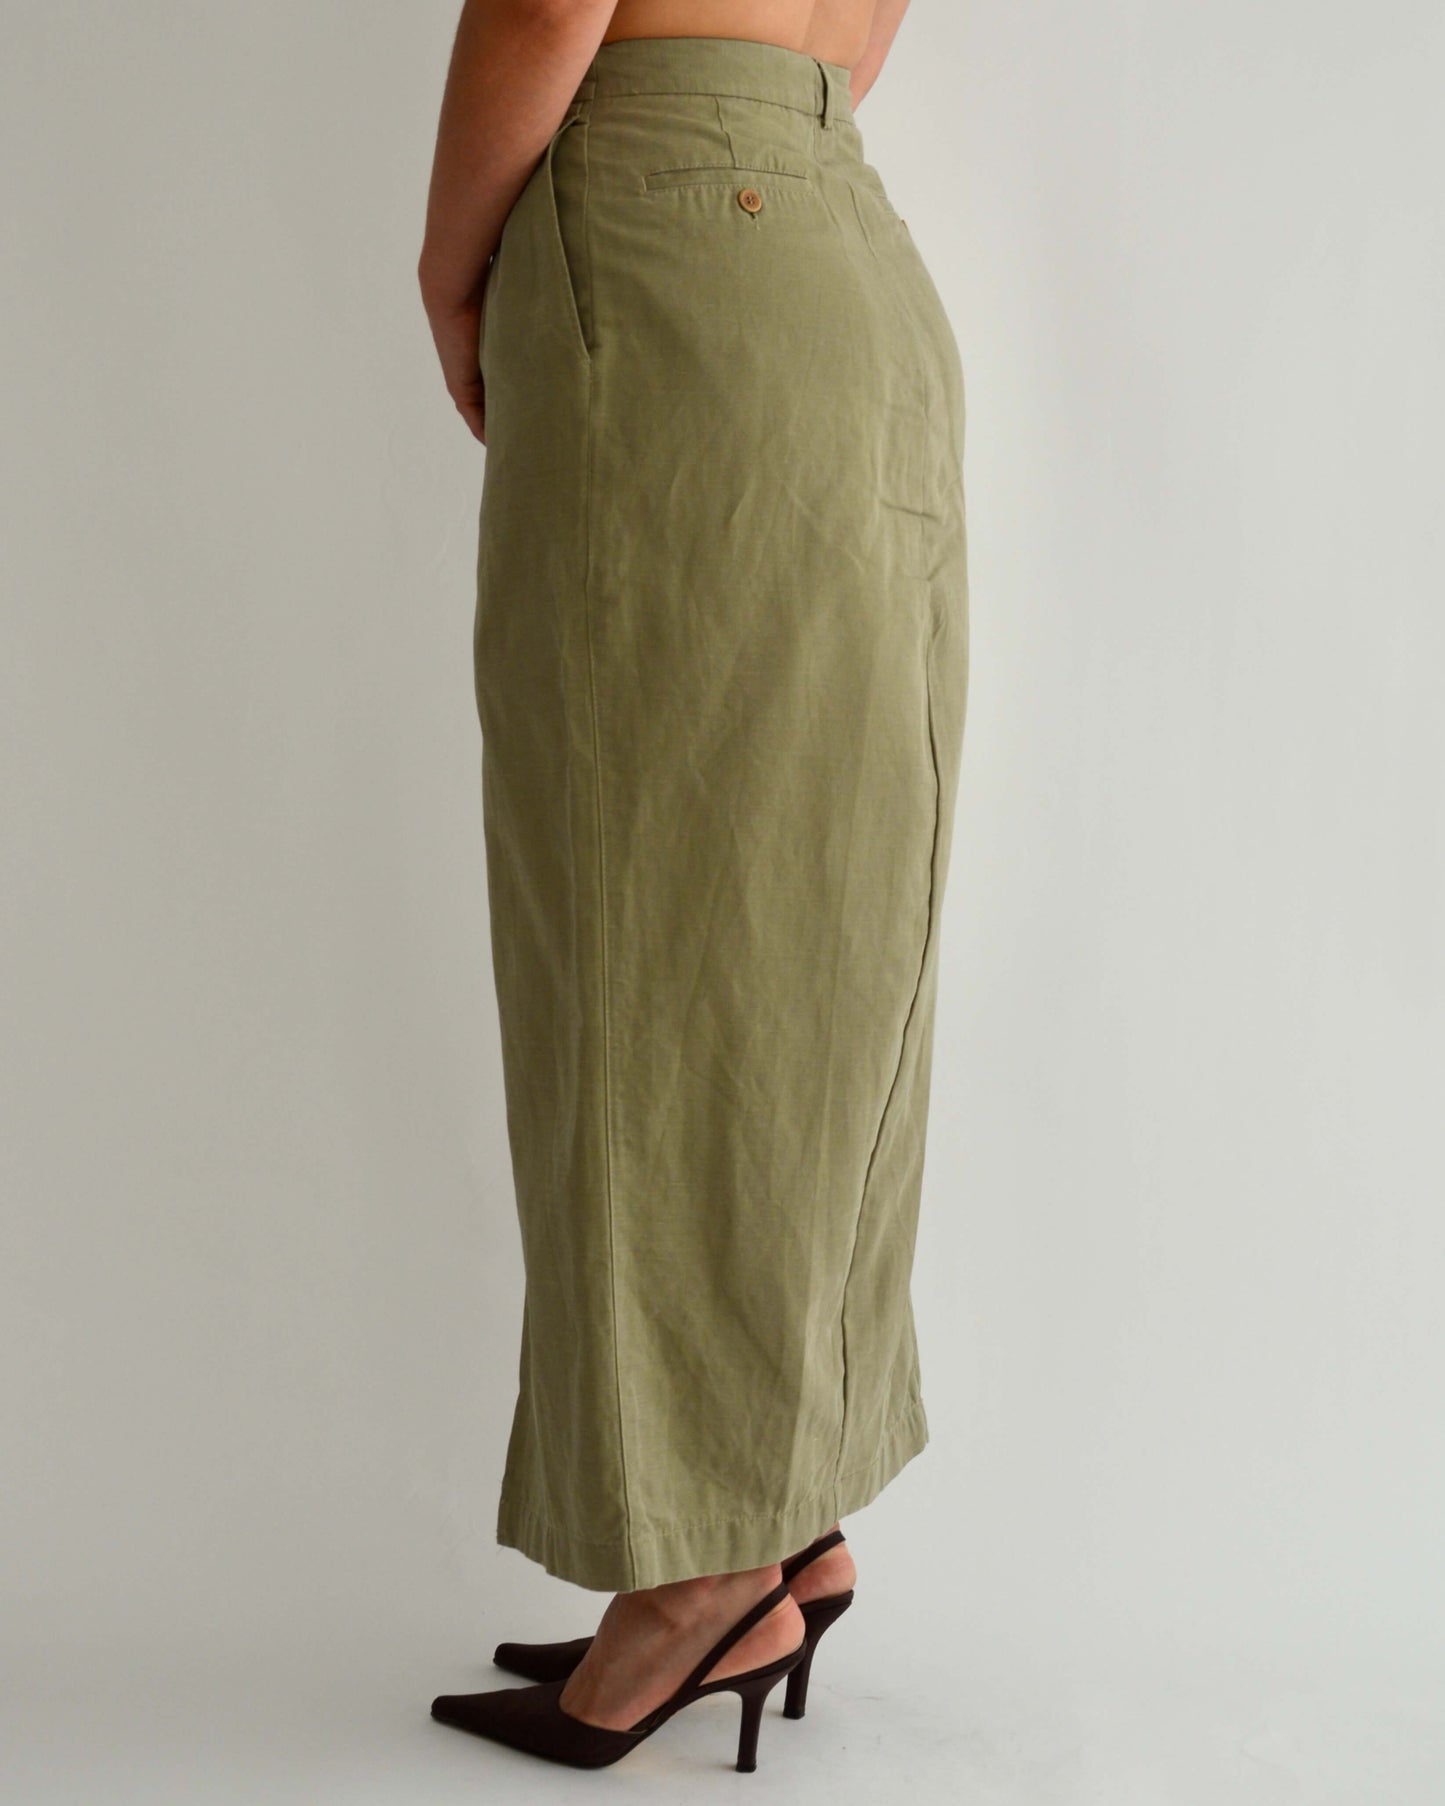 Vegan Long Skirt - Perfect Olive (S/M)